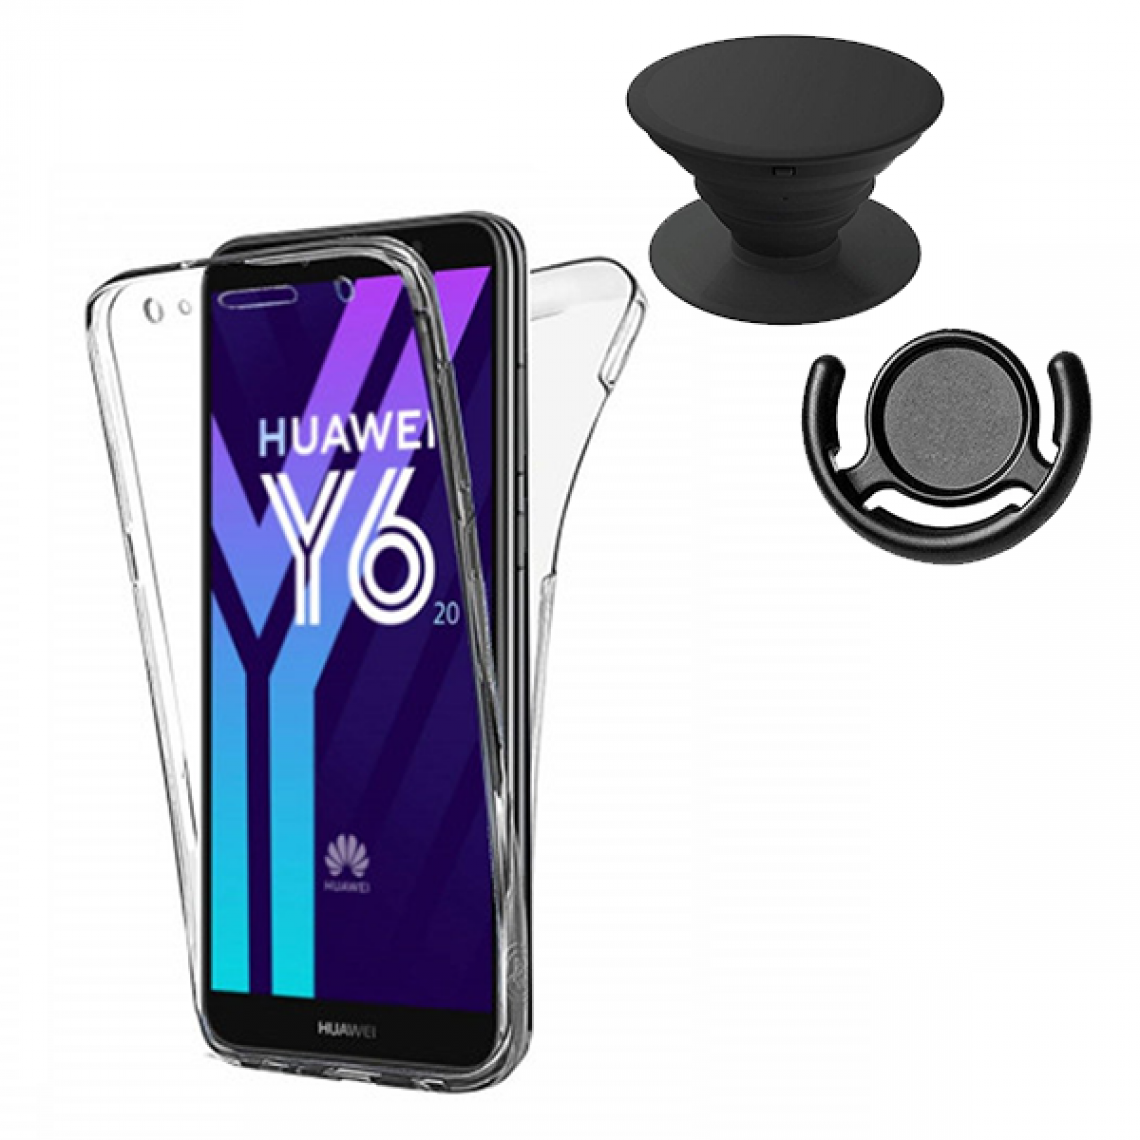 Phonecare - Kit Coque 3x1 360° Impact Protection + 1 PopSocket + 1 Support PopSocket Noir - Impact Protection - Huawei Y6 2018 - Coque, étui smartphone